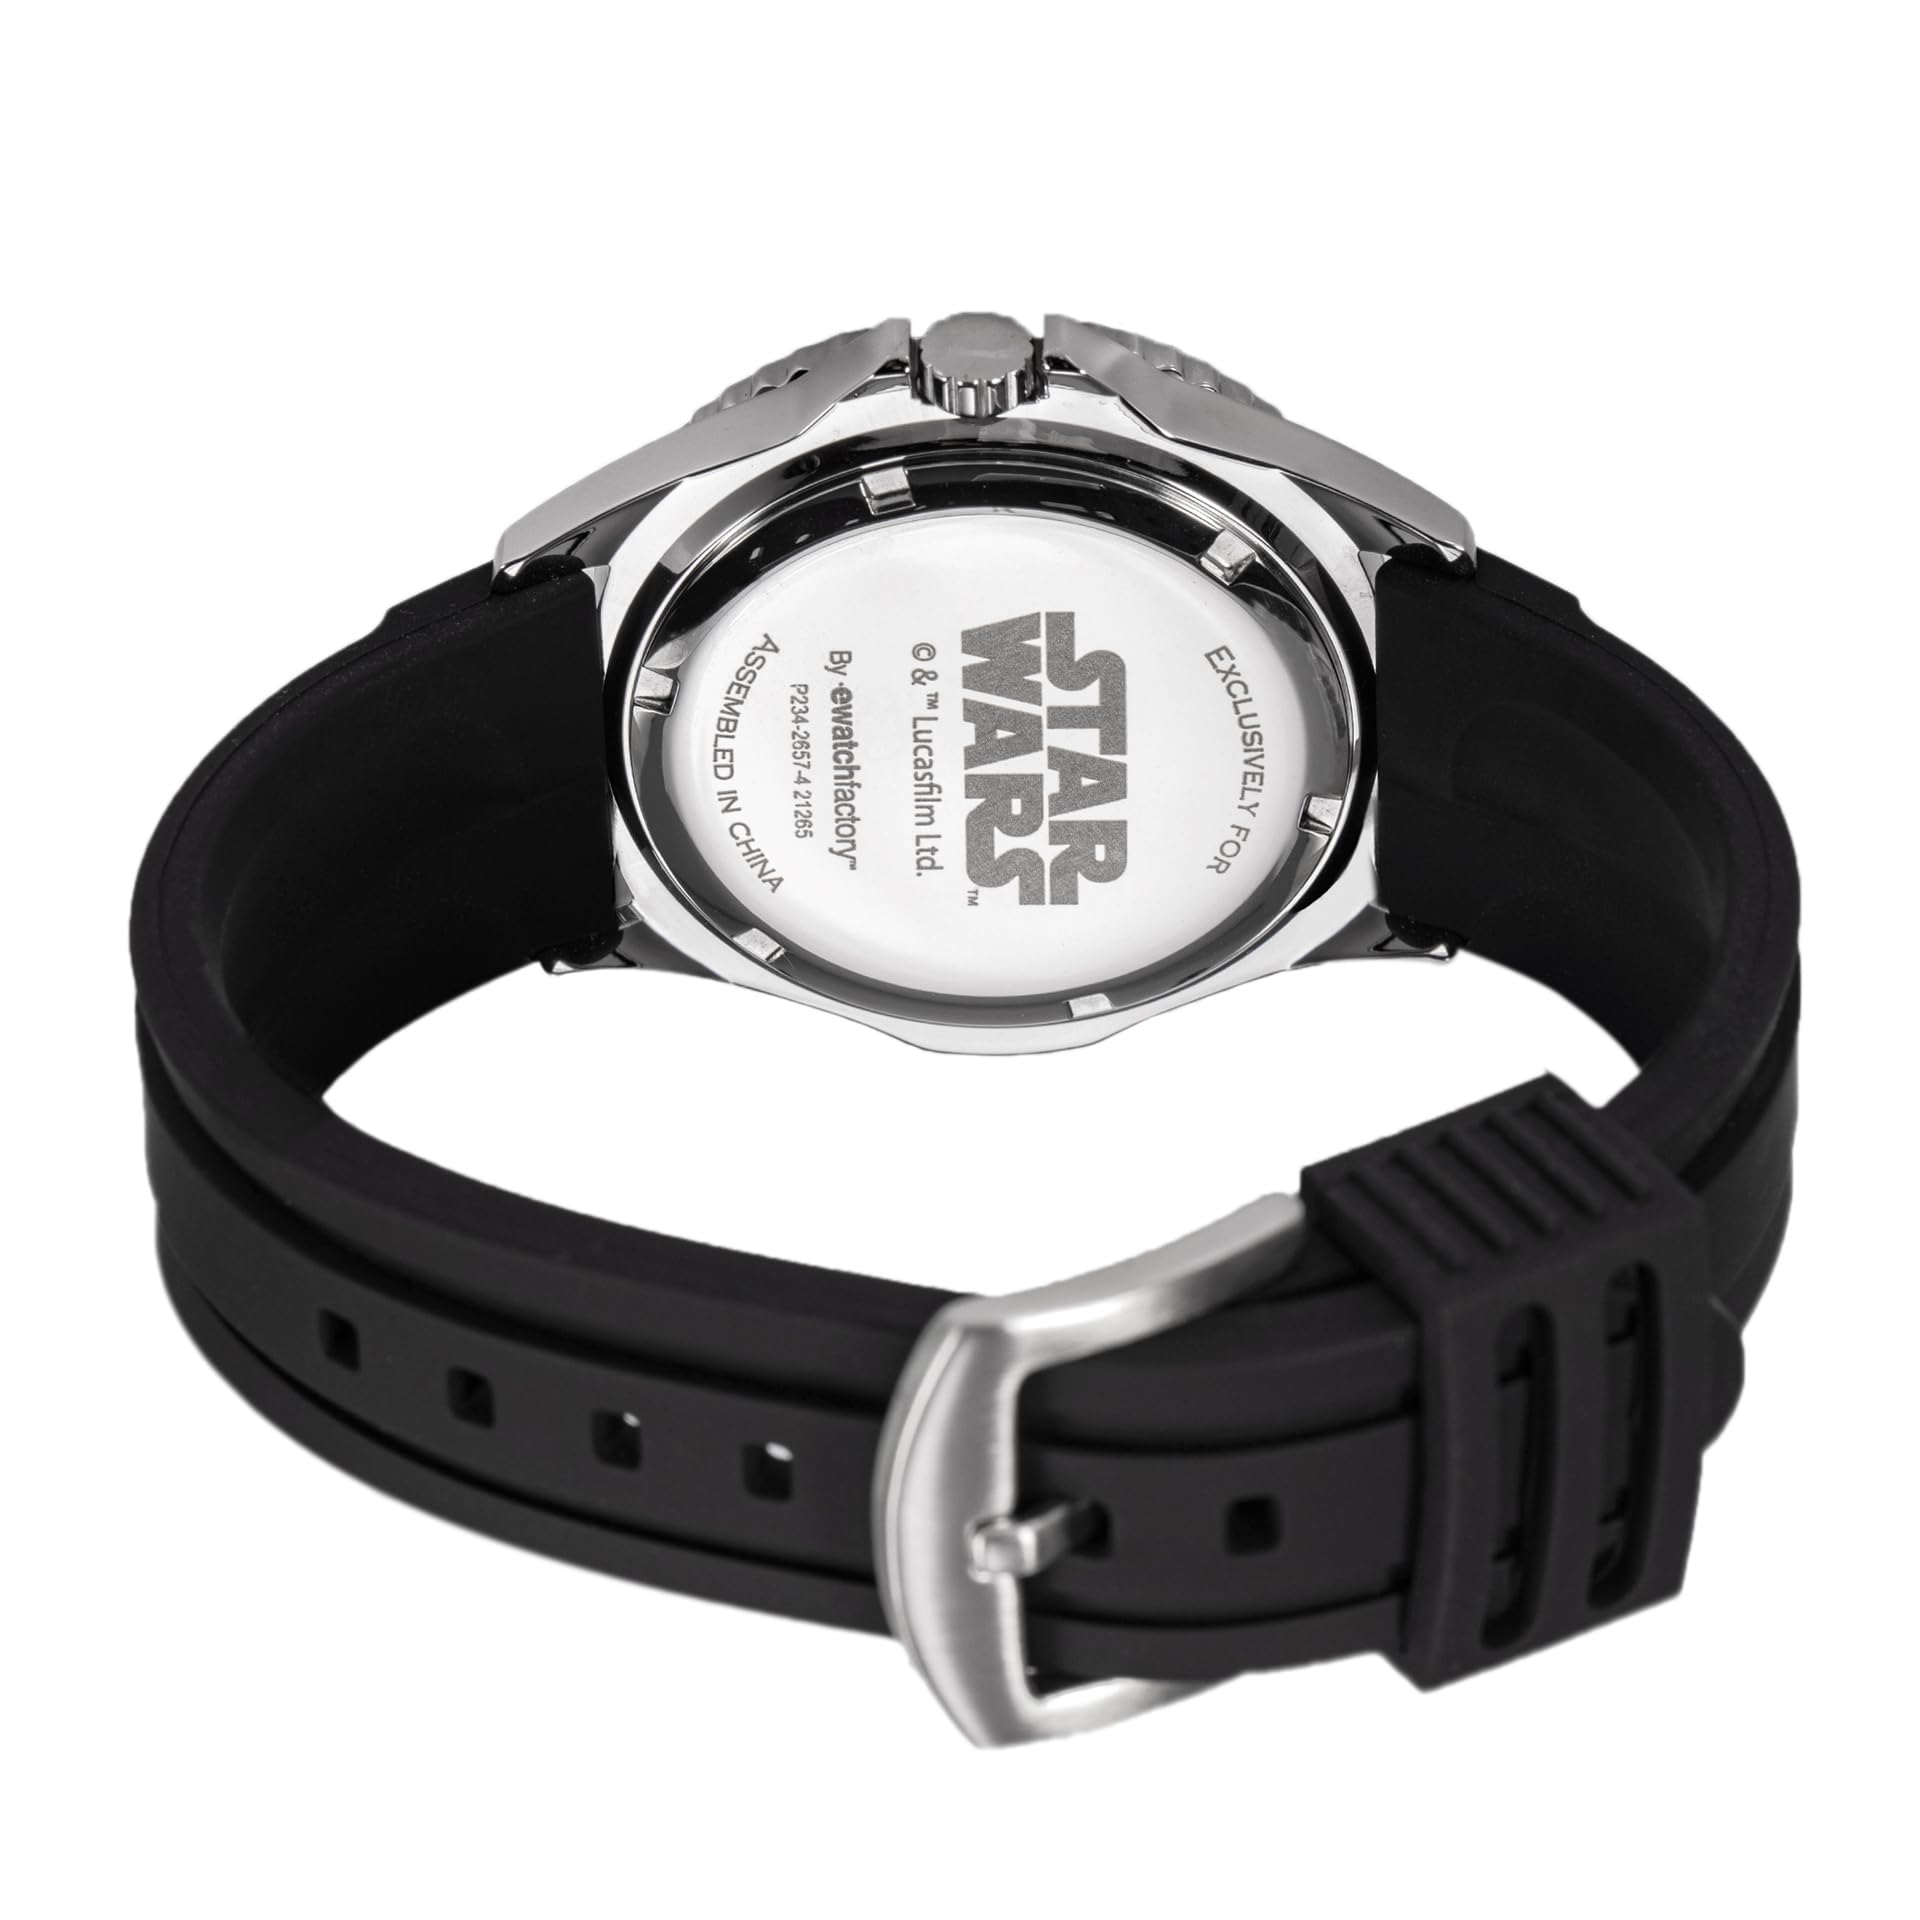 STAR WARS Adult Watch, Honors Diver Bezel Analog Quartz Watch